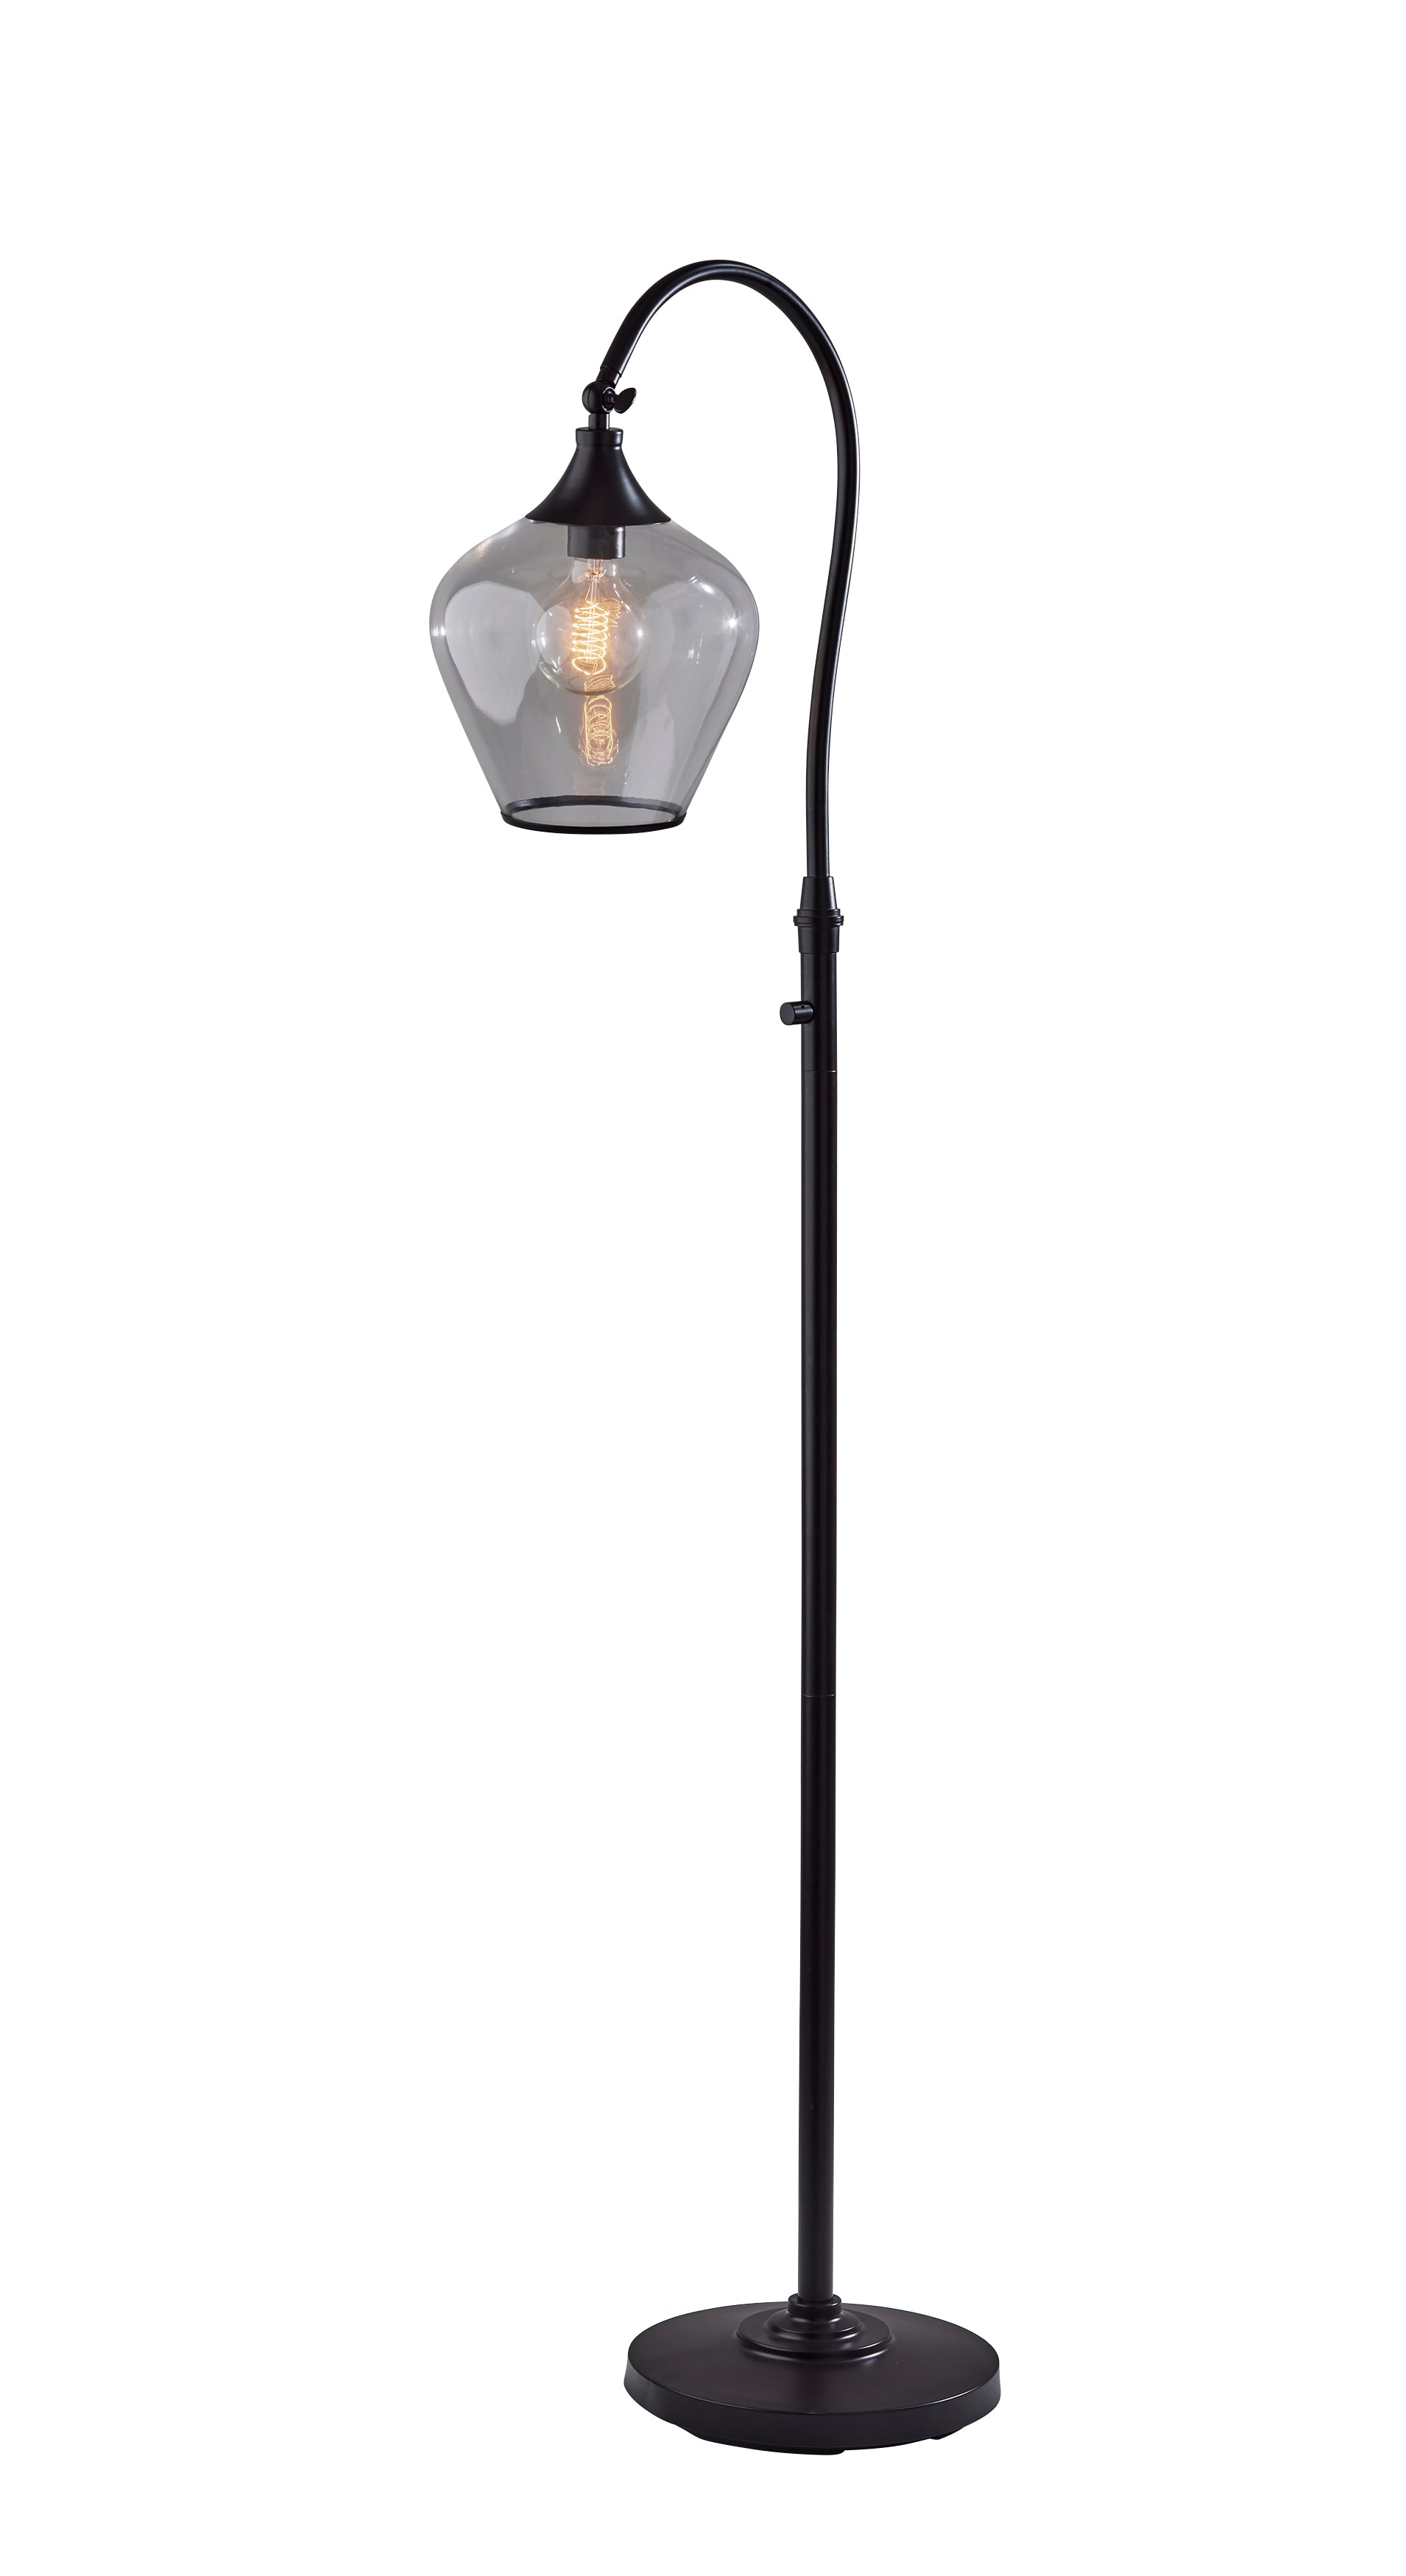 BRADFORD Floor lamp Bronze - 3923-26 | ADESSO